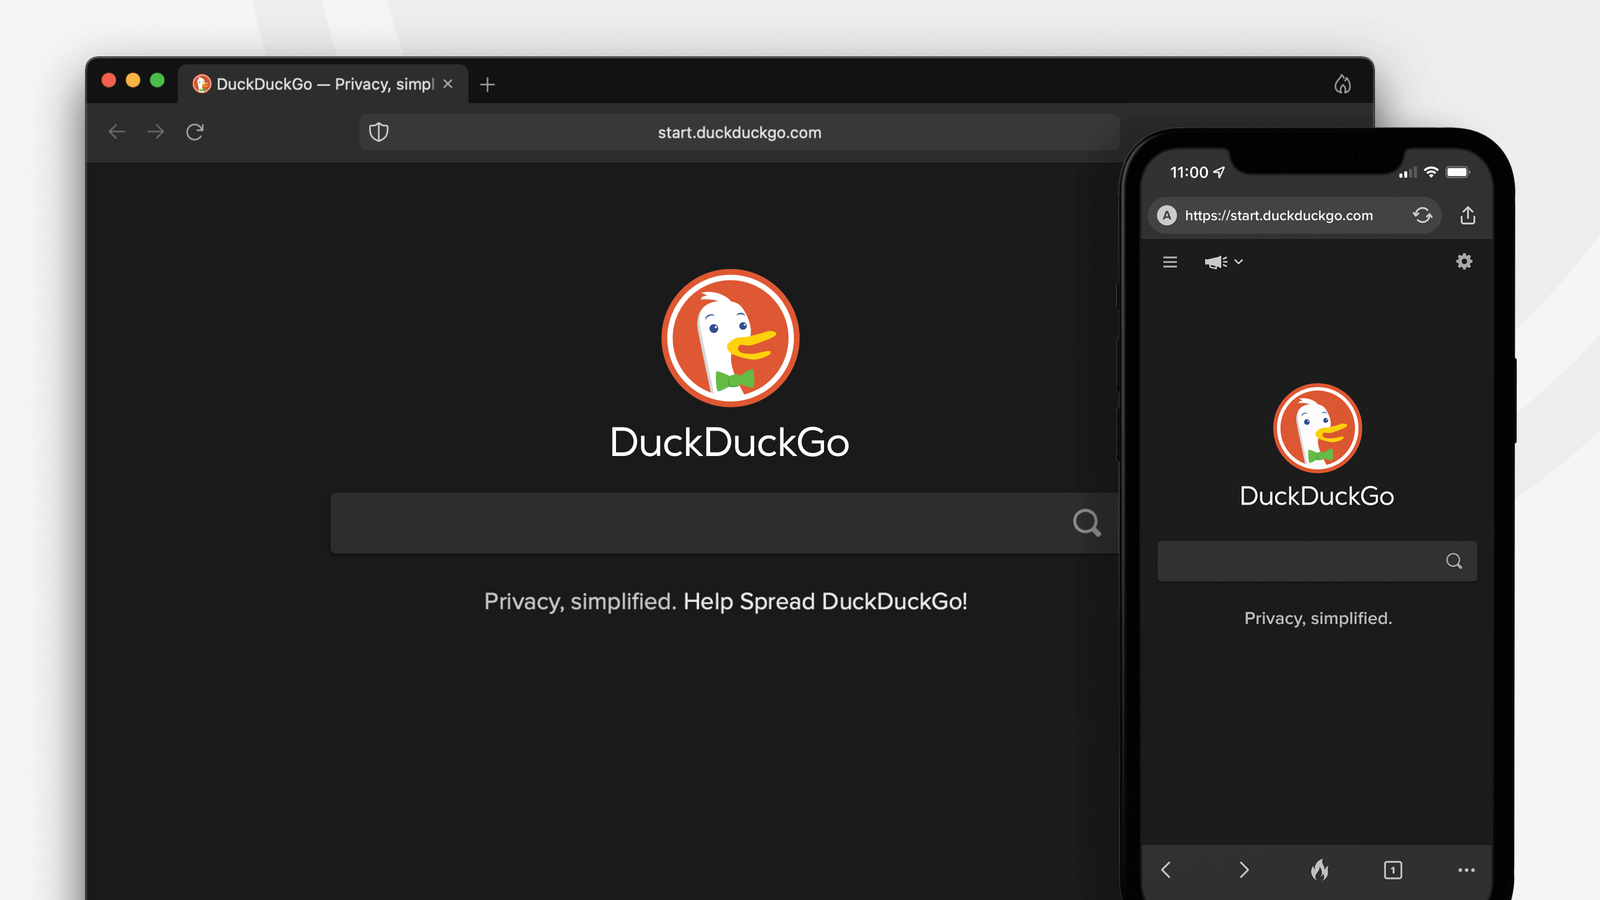 duckduckgo interface